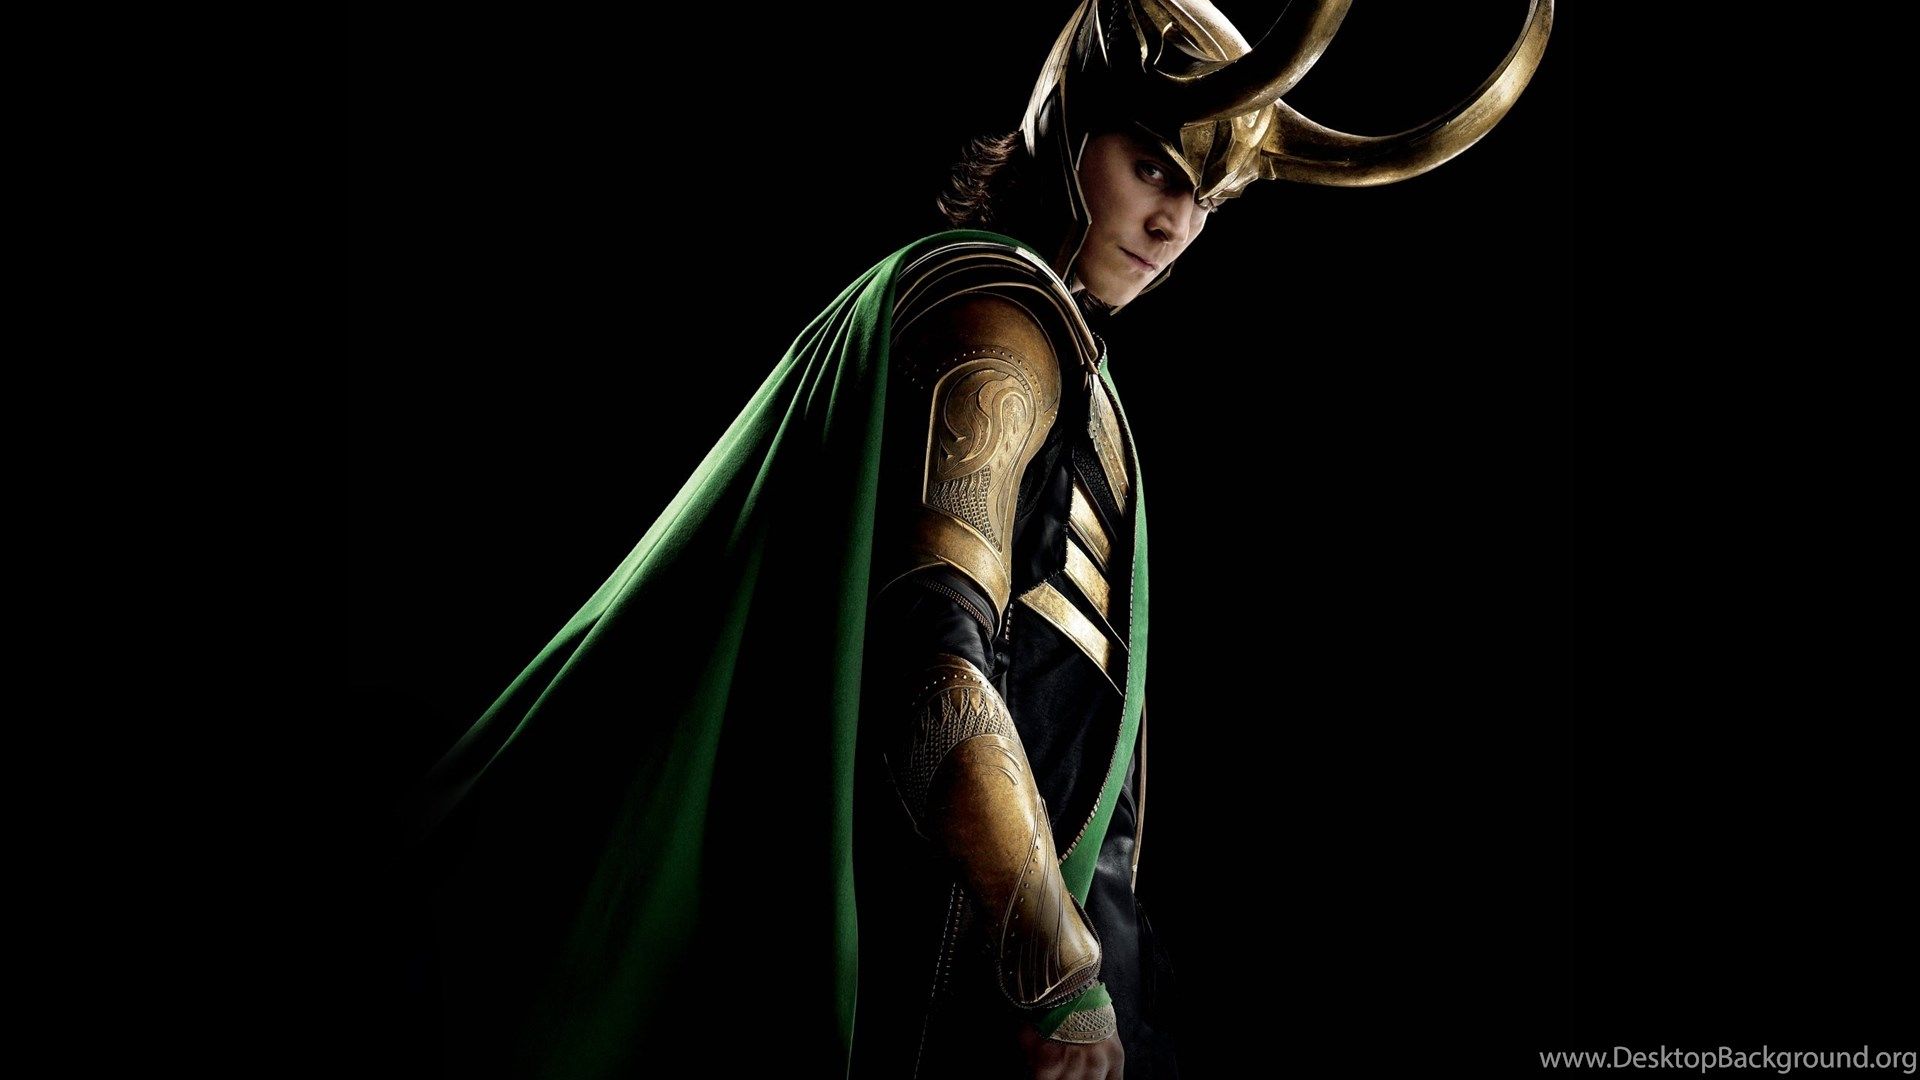 Thor The Dark World Tom Hiddleston As Loki HD Desktop Wallpaper. Desktop Background